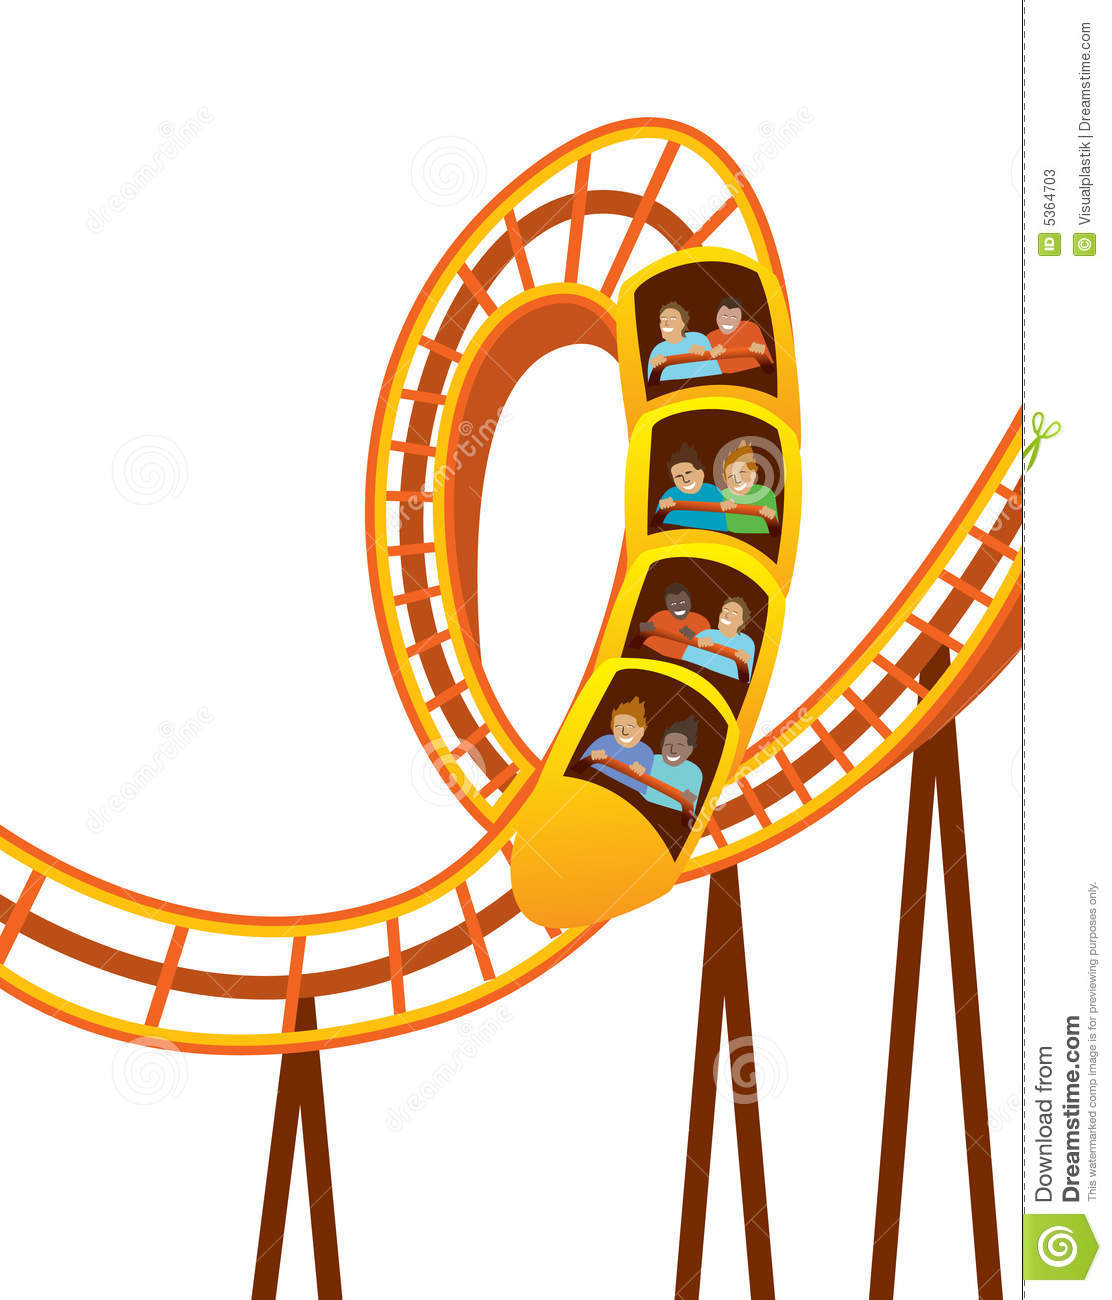 Roller coaster georgiajanet c